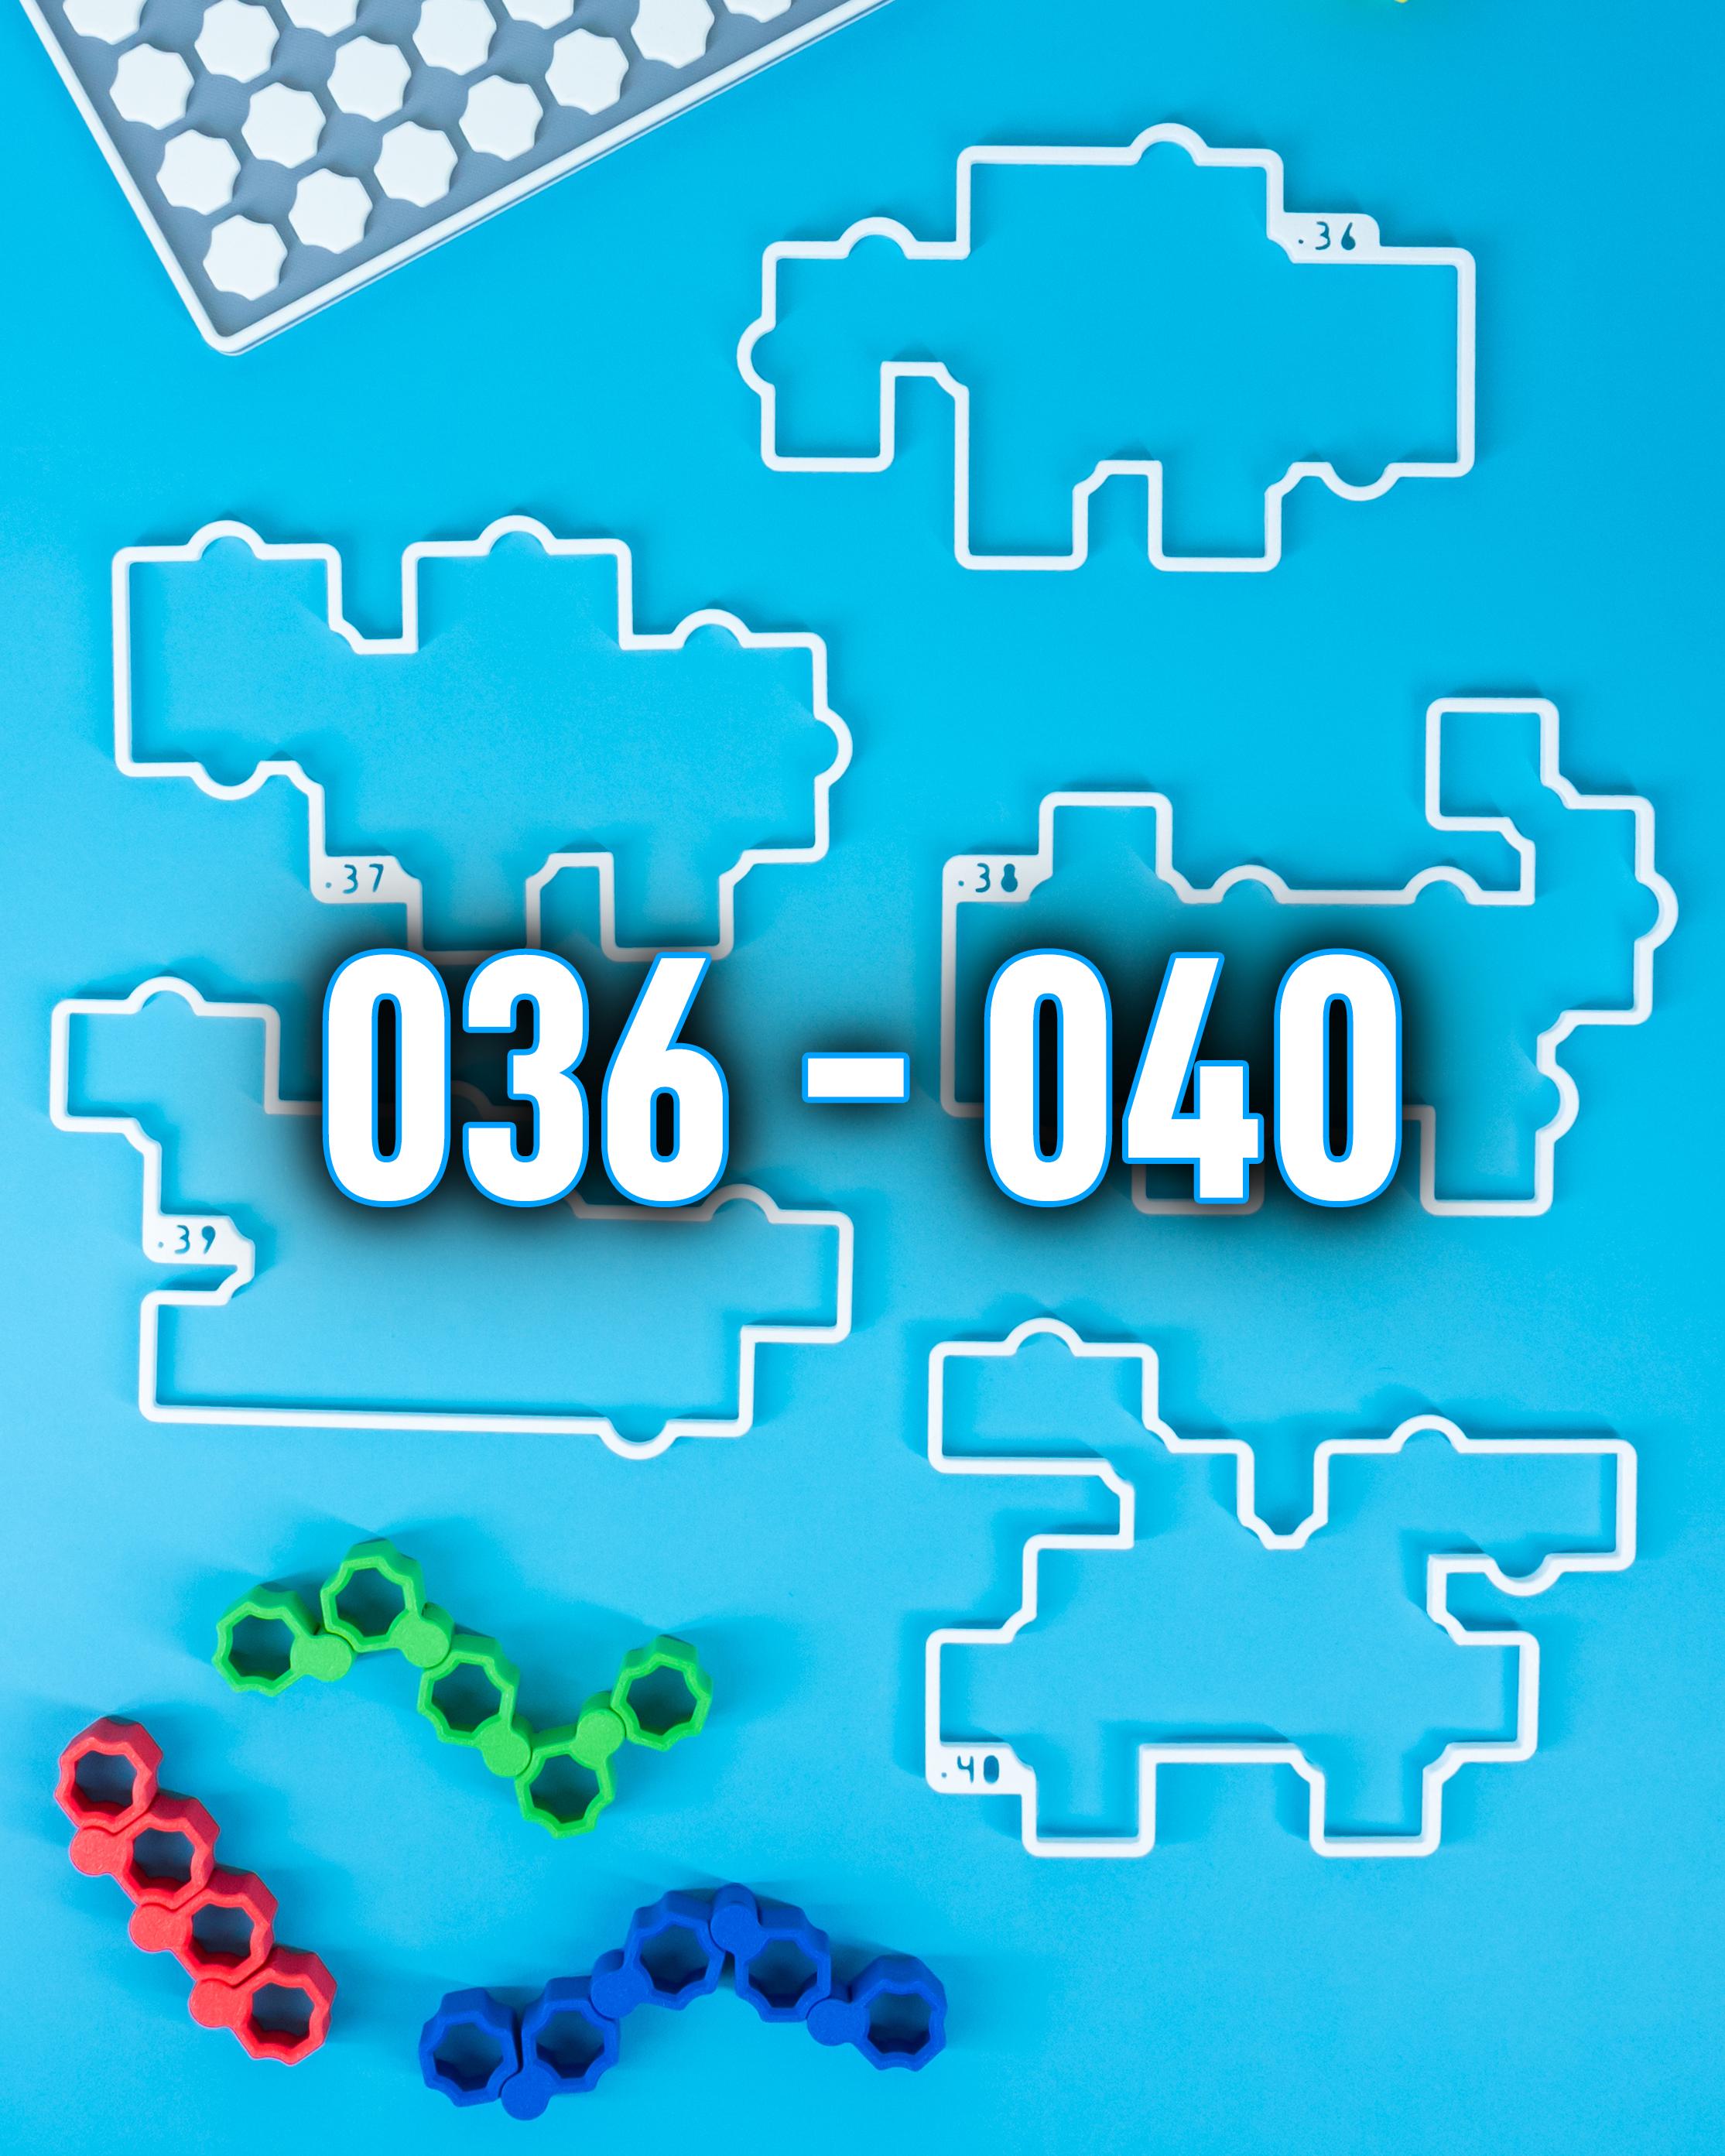 SKEWBITS v2.0 Puzzle Game // Full Set w. Problems 001-050 3d model